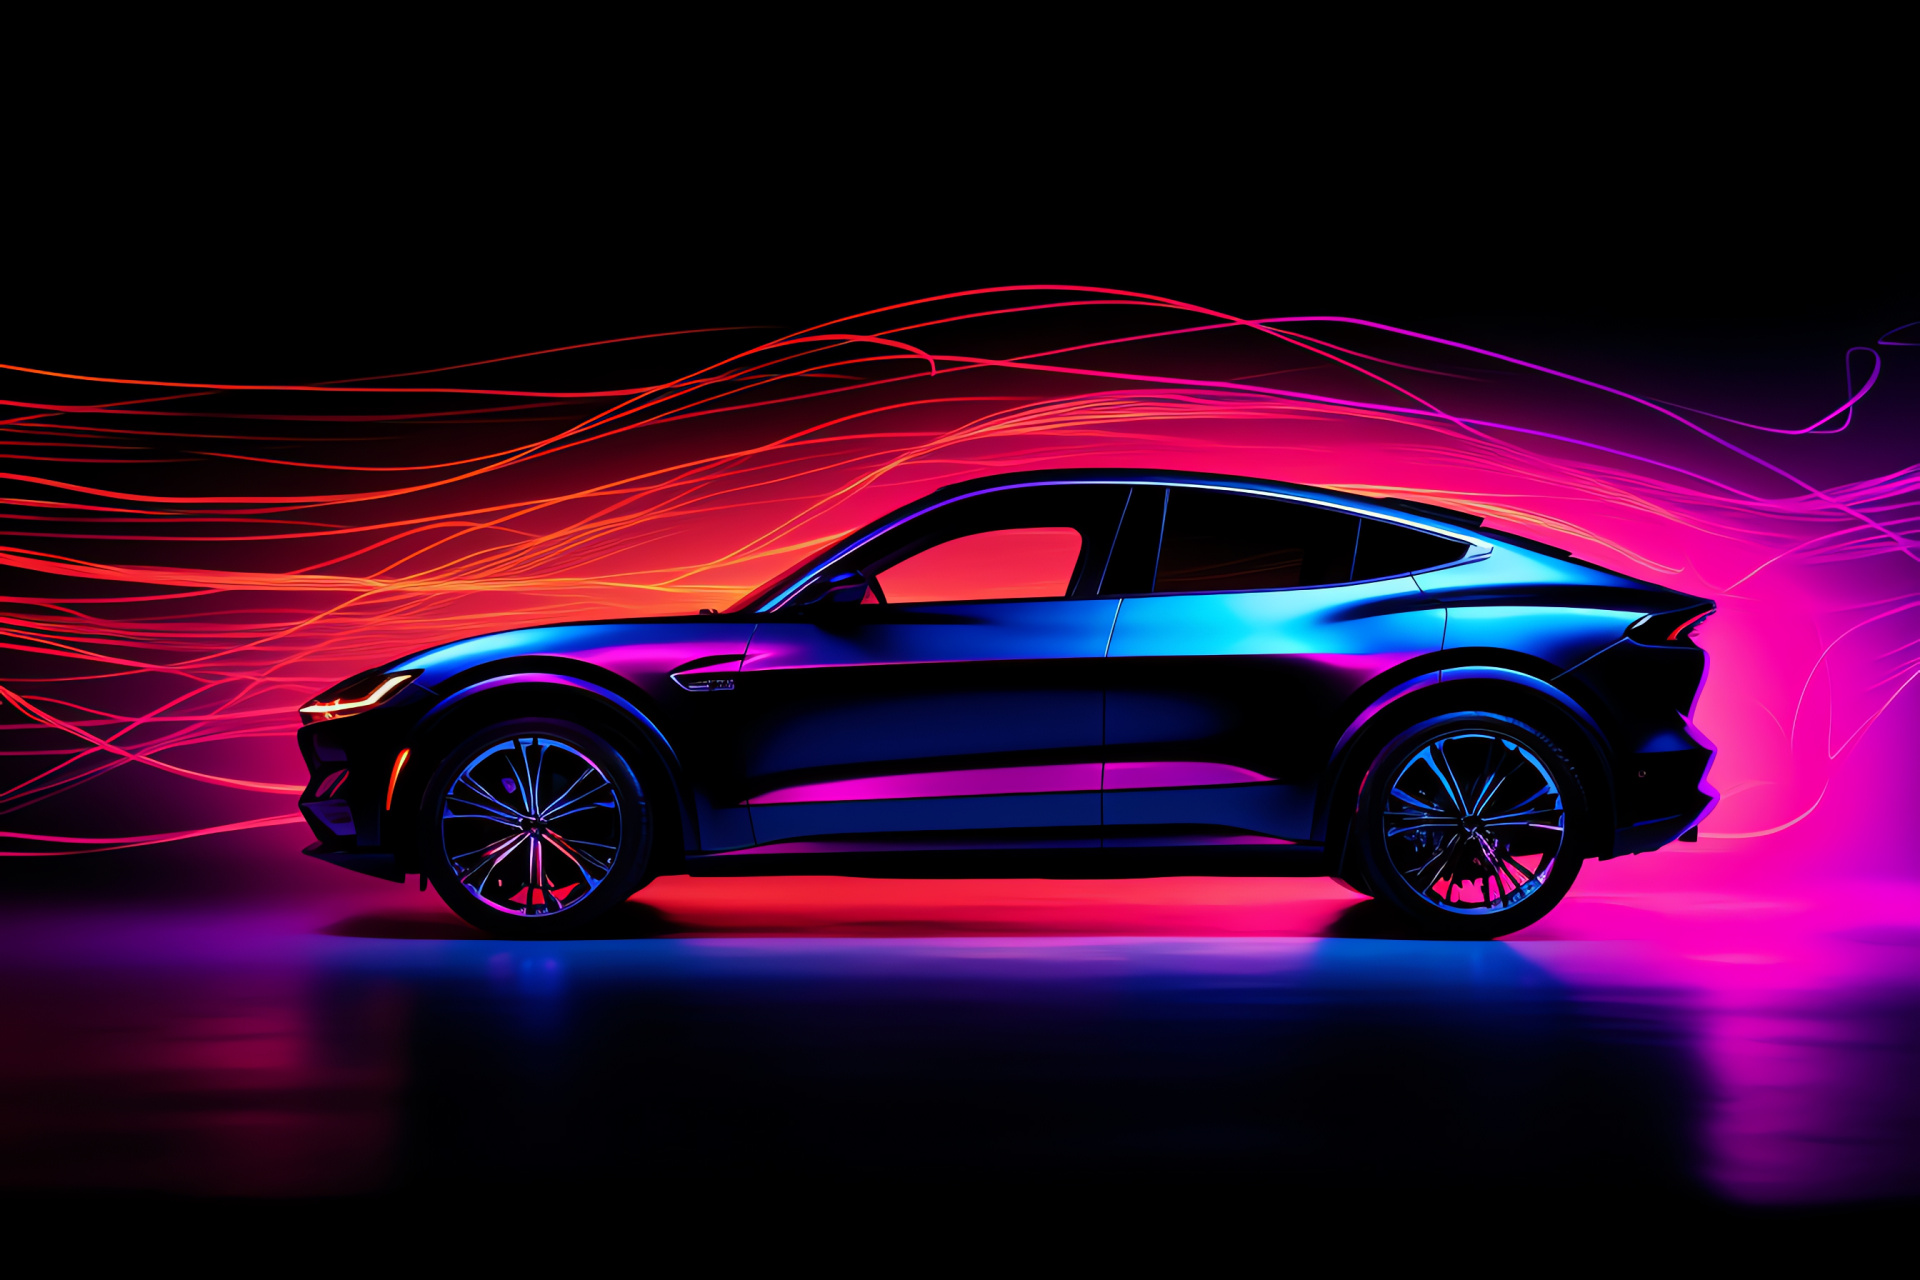 Mustang profile view, Neon backdrop illumination, Side perspective, Electric automotive performance, HD Desktop Wallpaper